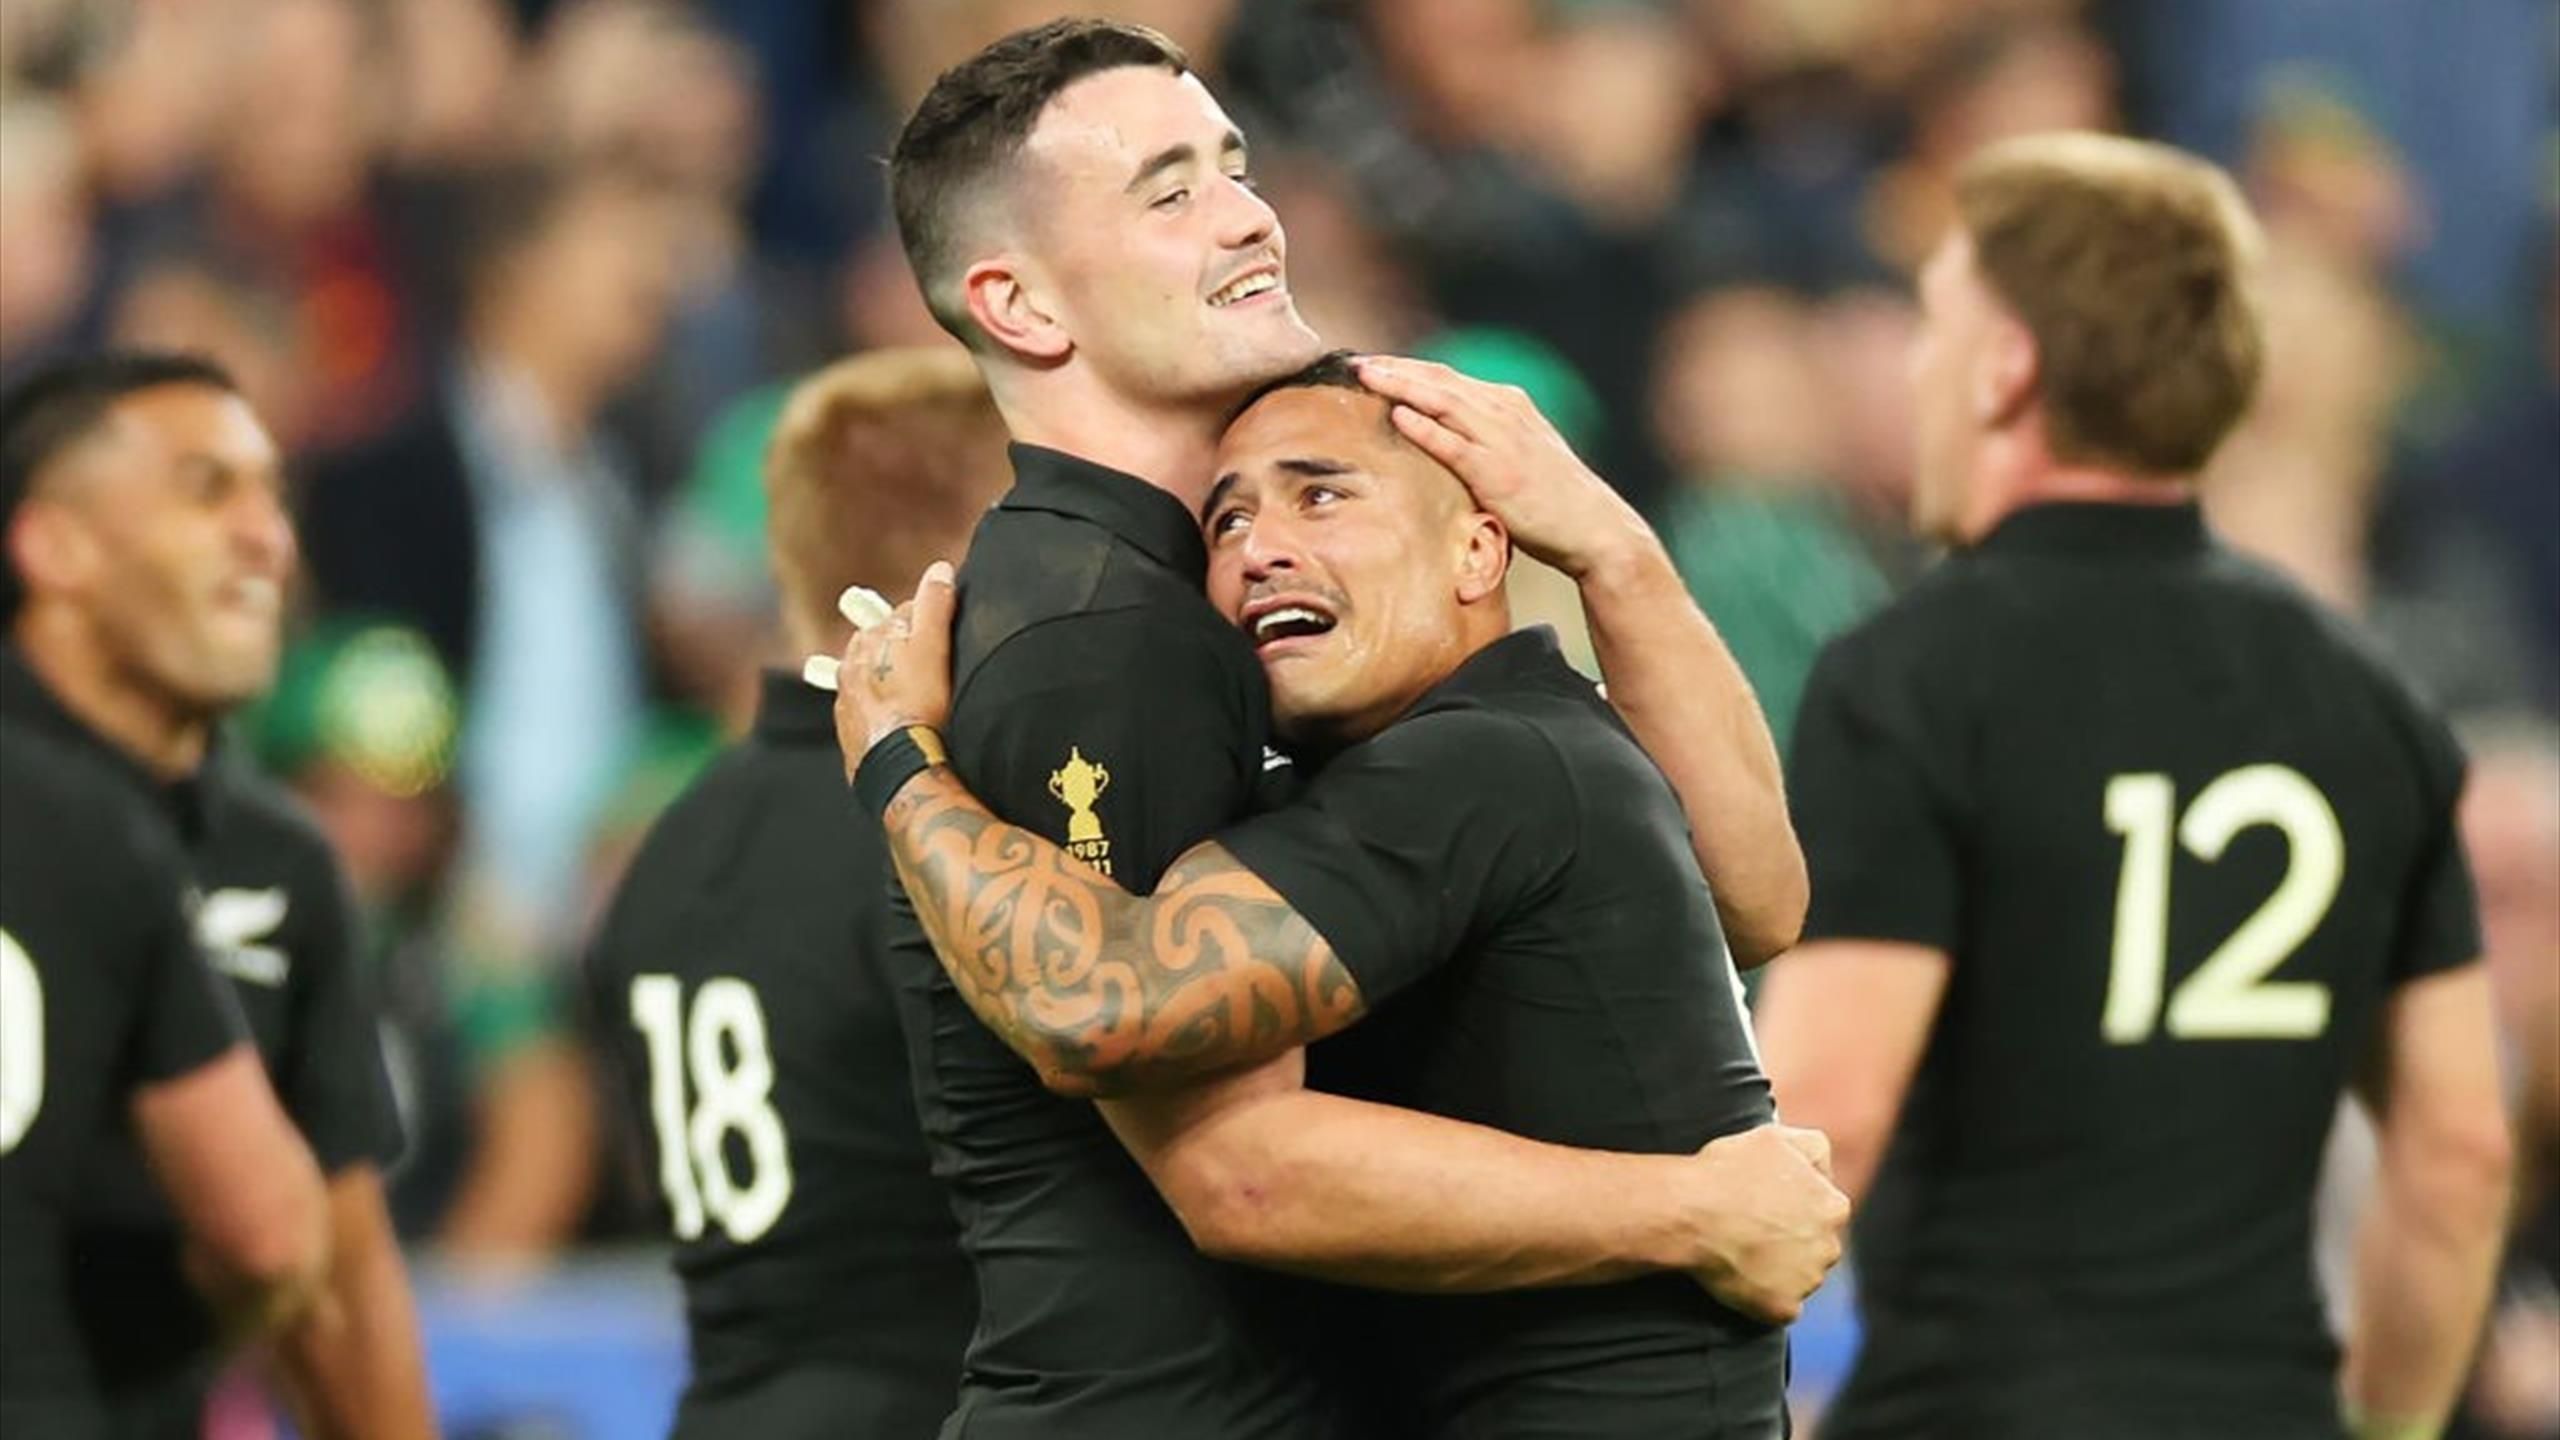 Mondiali 2023: la Nuova Zelanda elimina l’Irlanda dopo una grande lotta e arriva in semifinale (24-28)